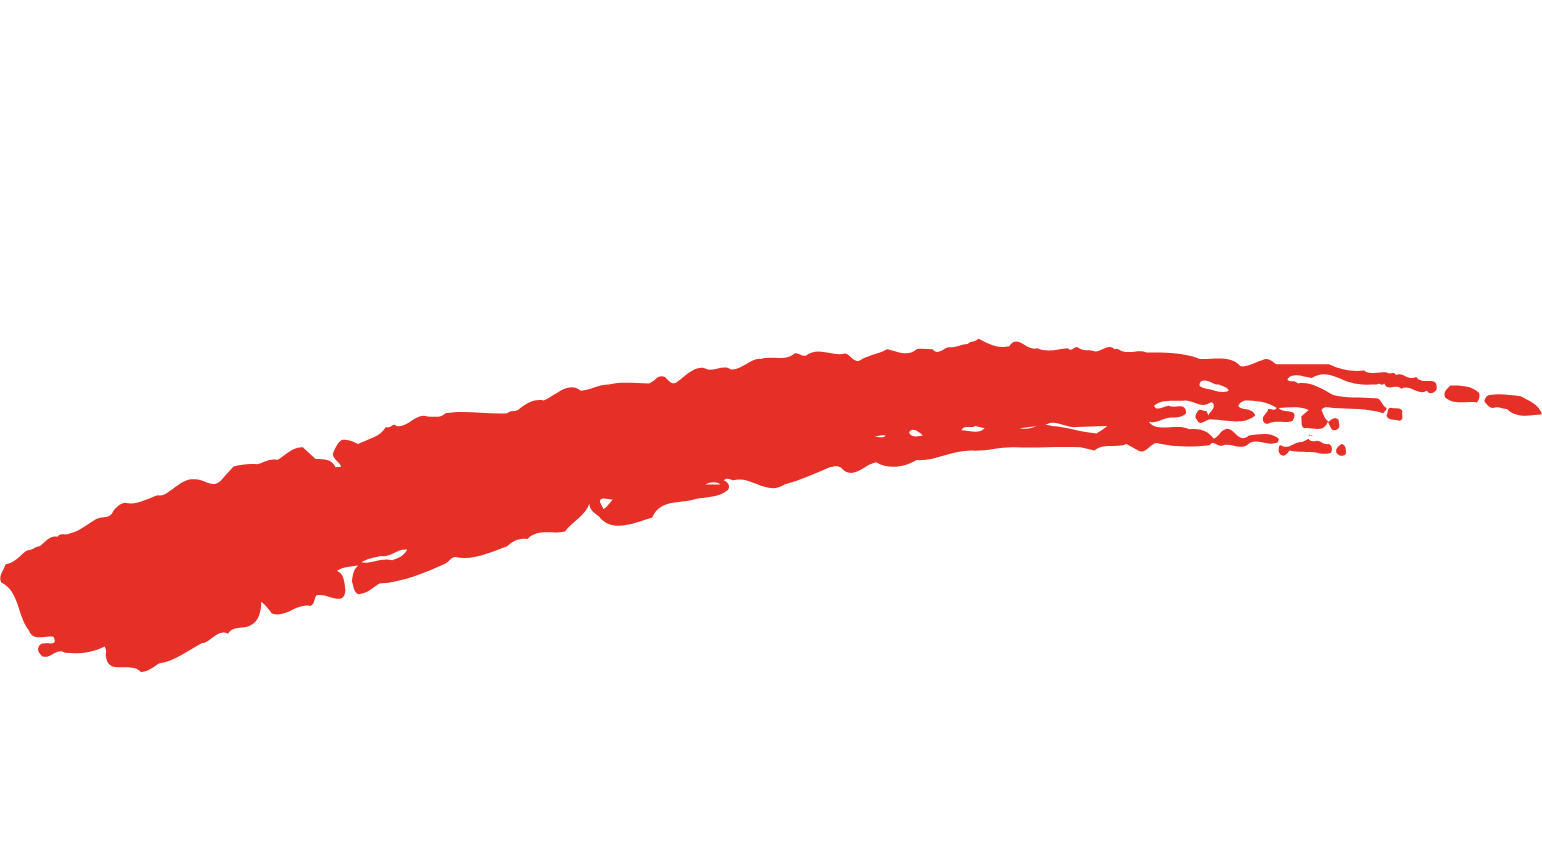 Aluminium Bahrain (Alba) logo large for dark backgrounds (transparent PNG)